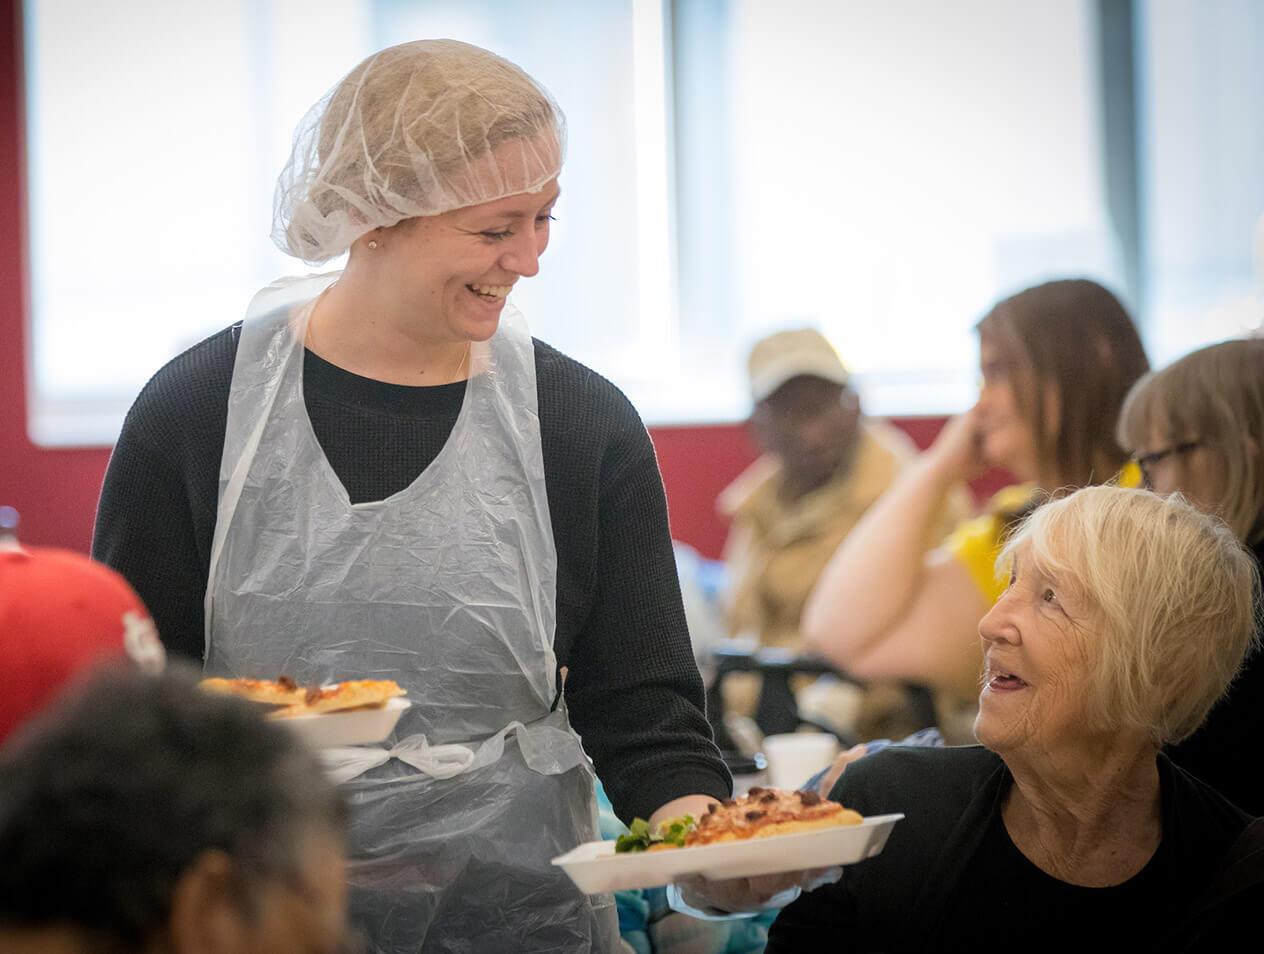 A Creighton alumni serving food to the elderly